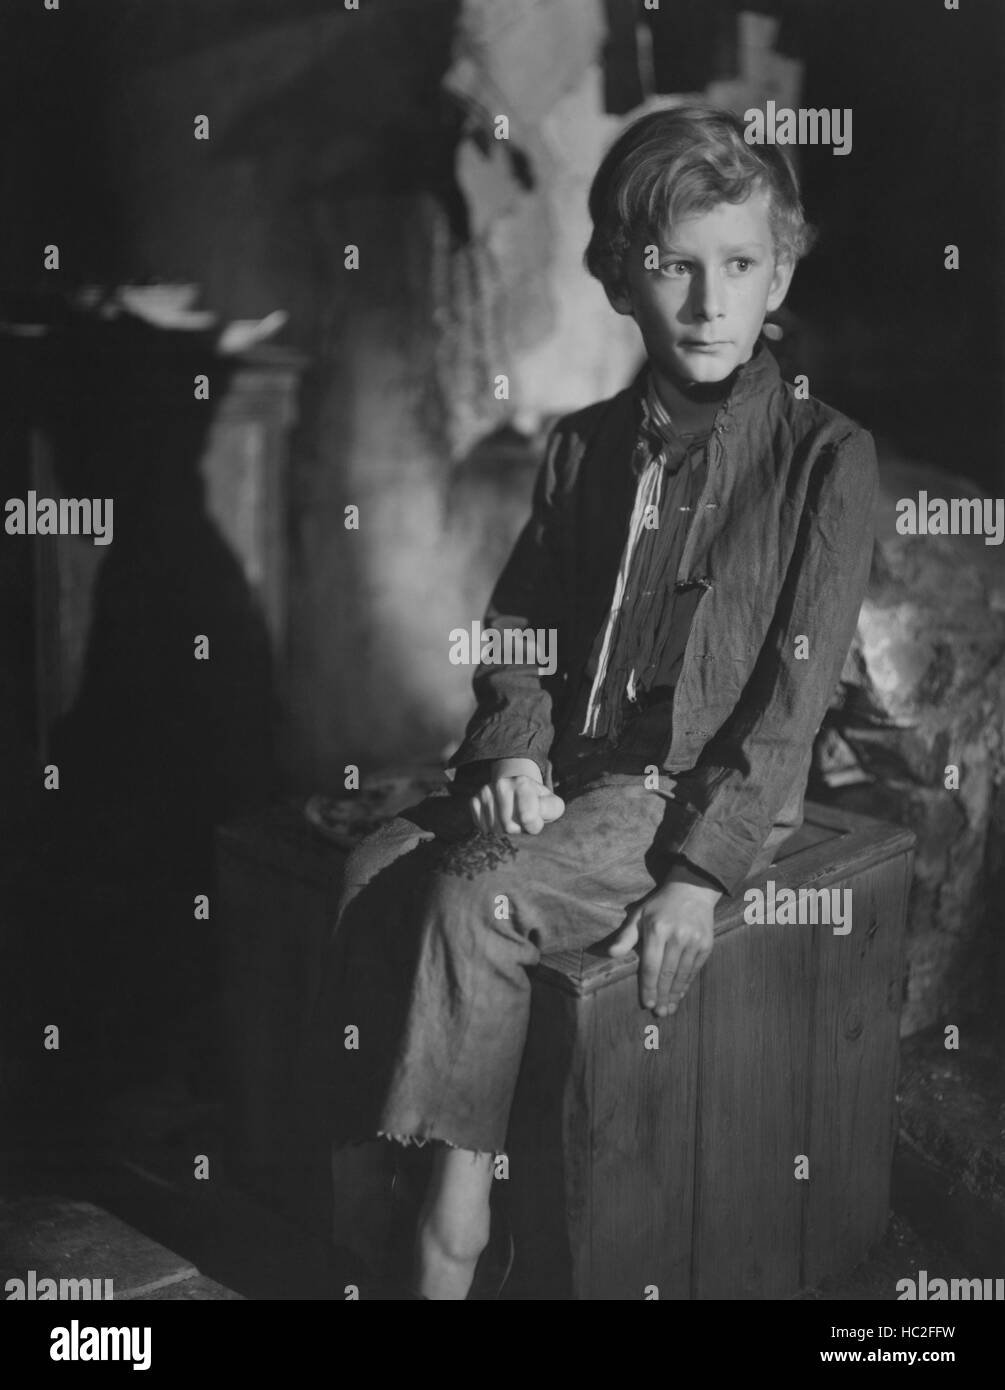 OLIVER TWIST, John Howard Davies, 1948 Stock Photo - Alamy